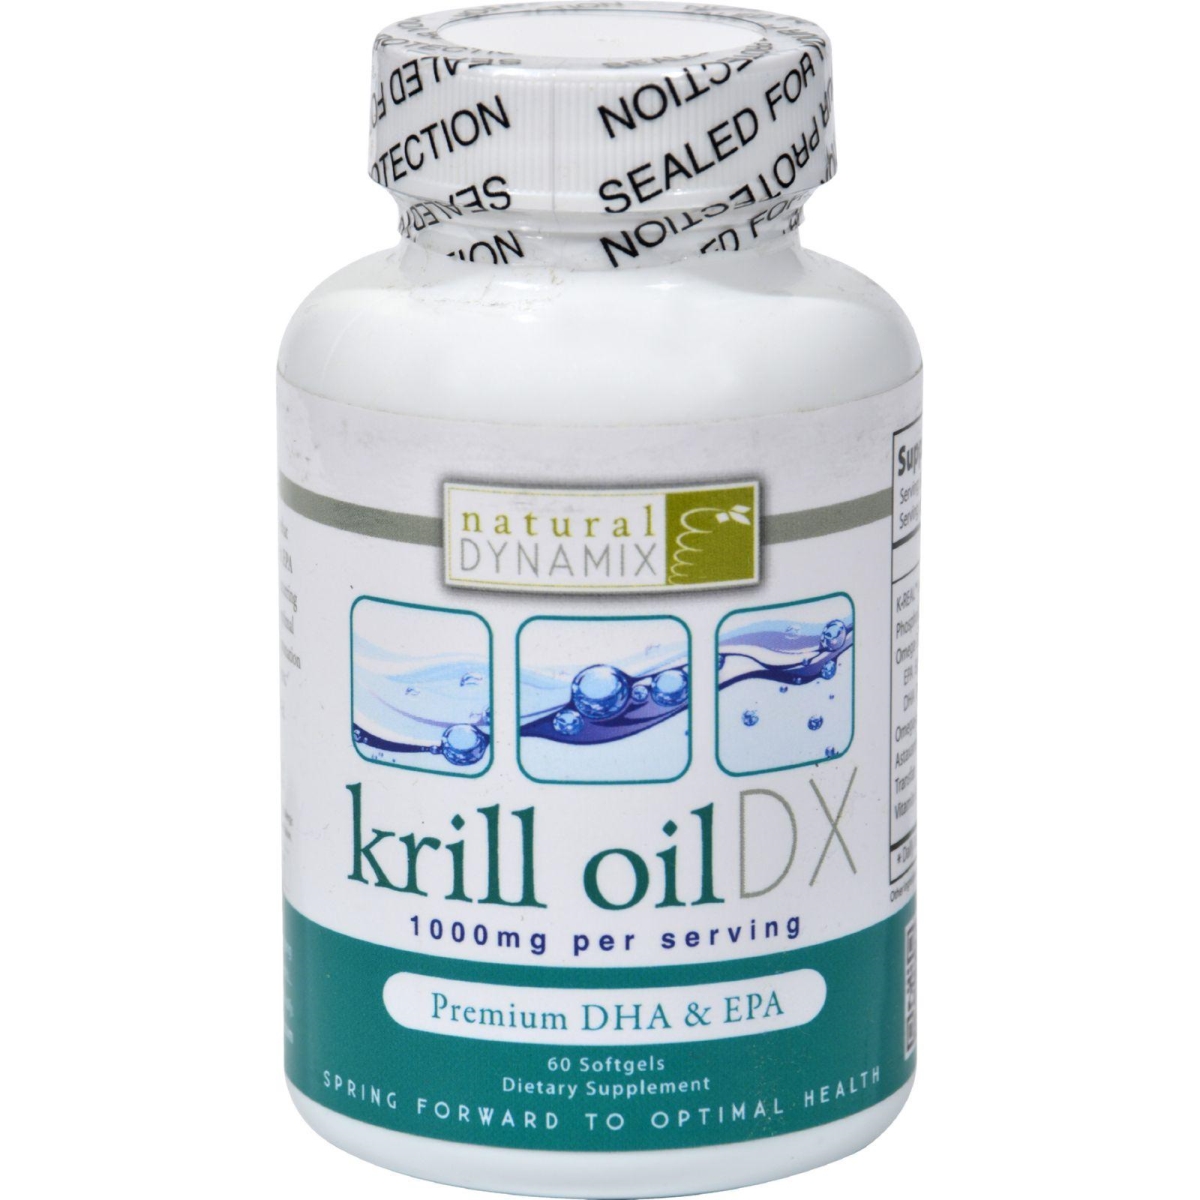 Hg0667790 Krill Oil Dx - 60 Softgels